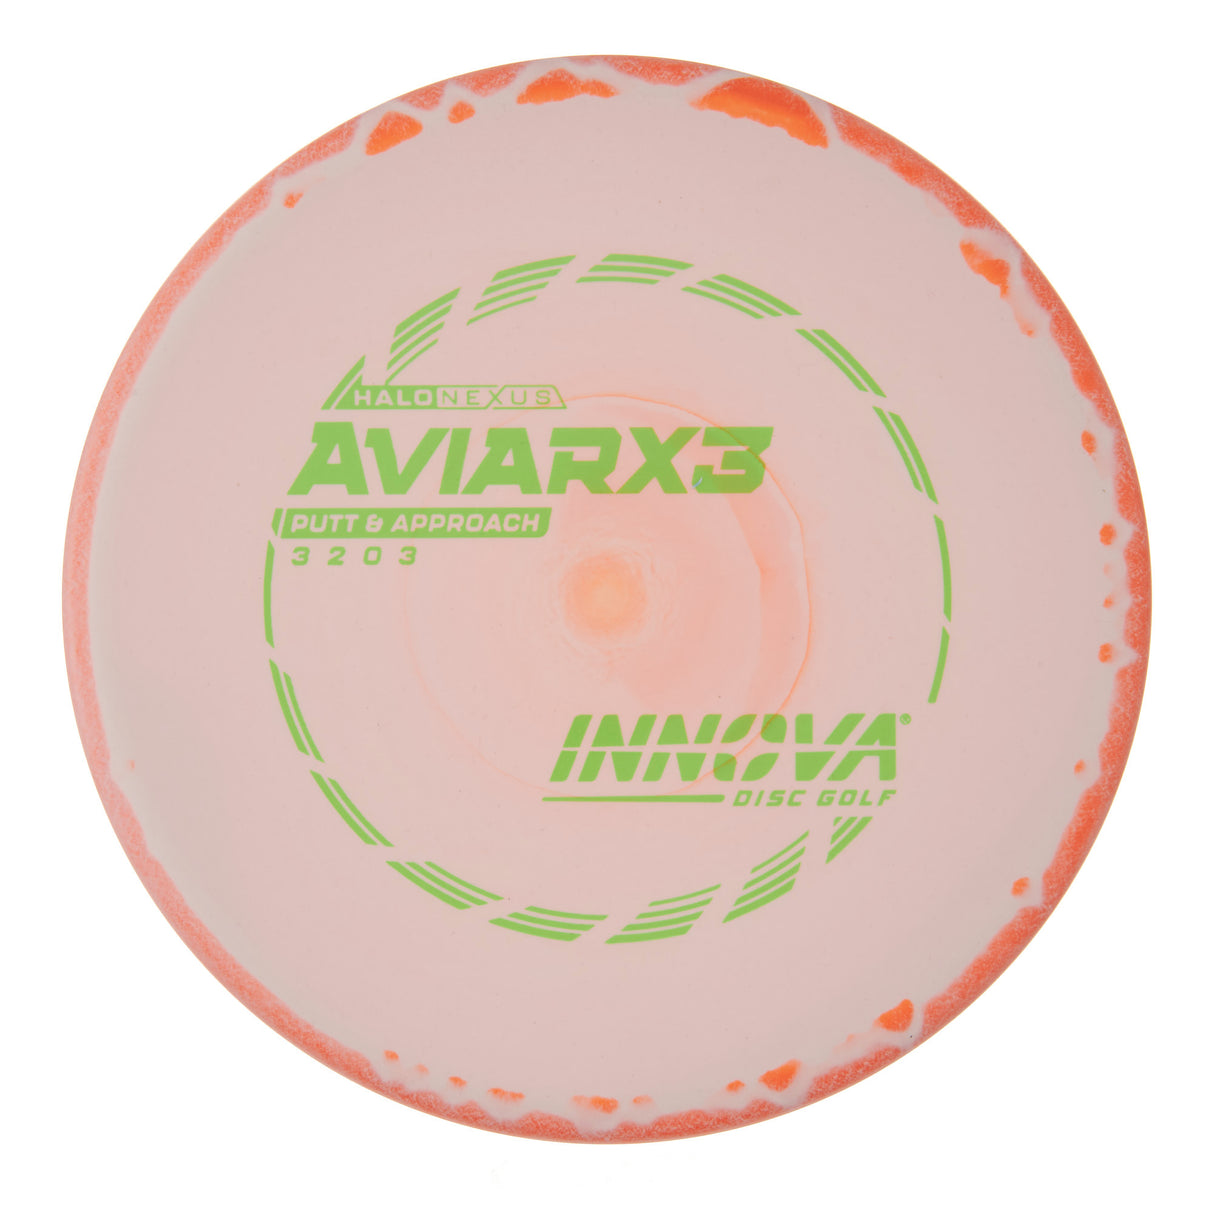 Innova AviarX3 - Halo Nexus 175g | Style 0001